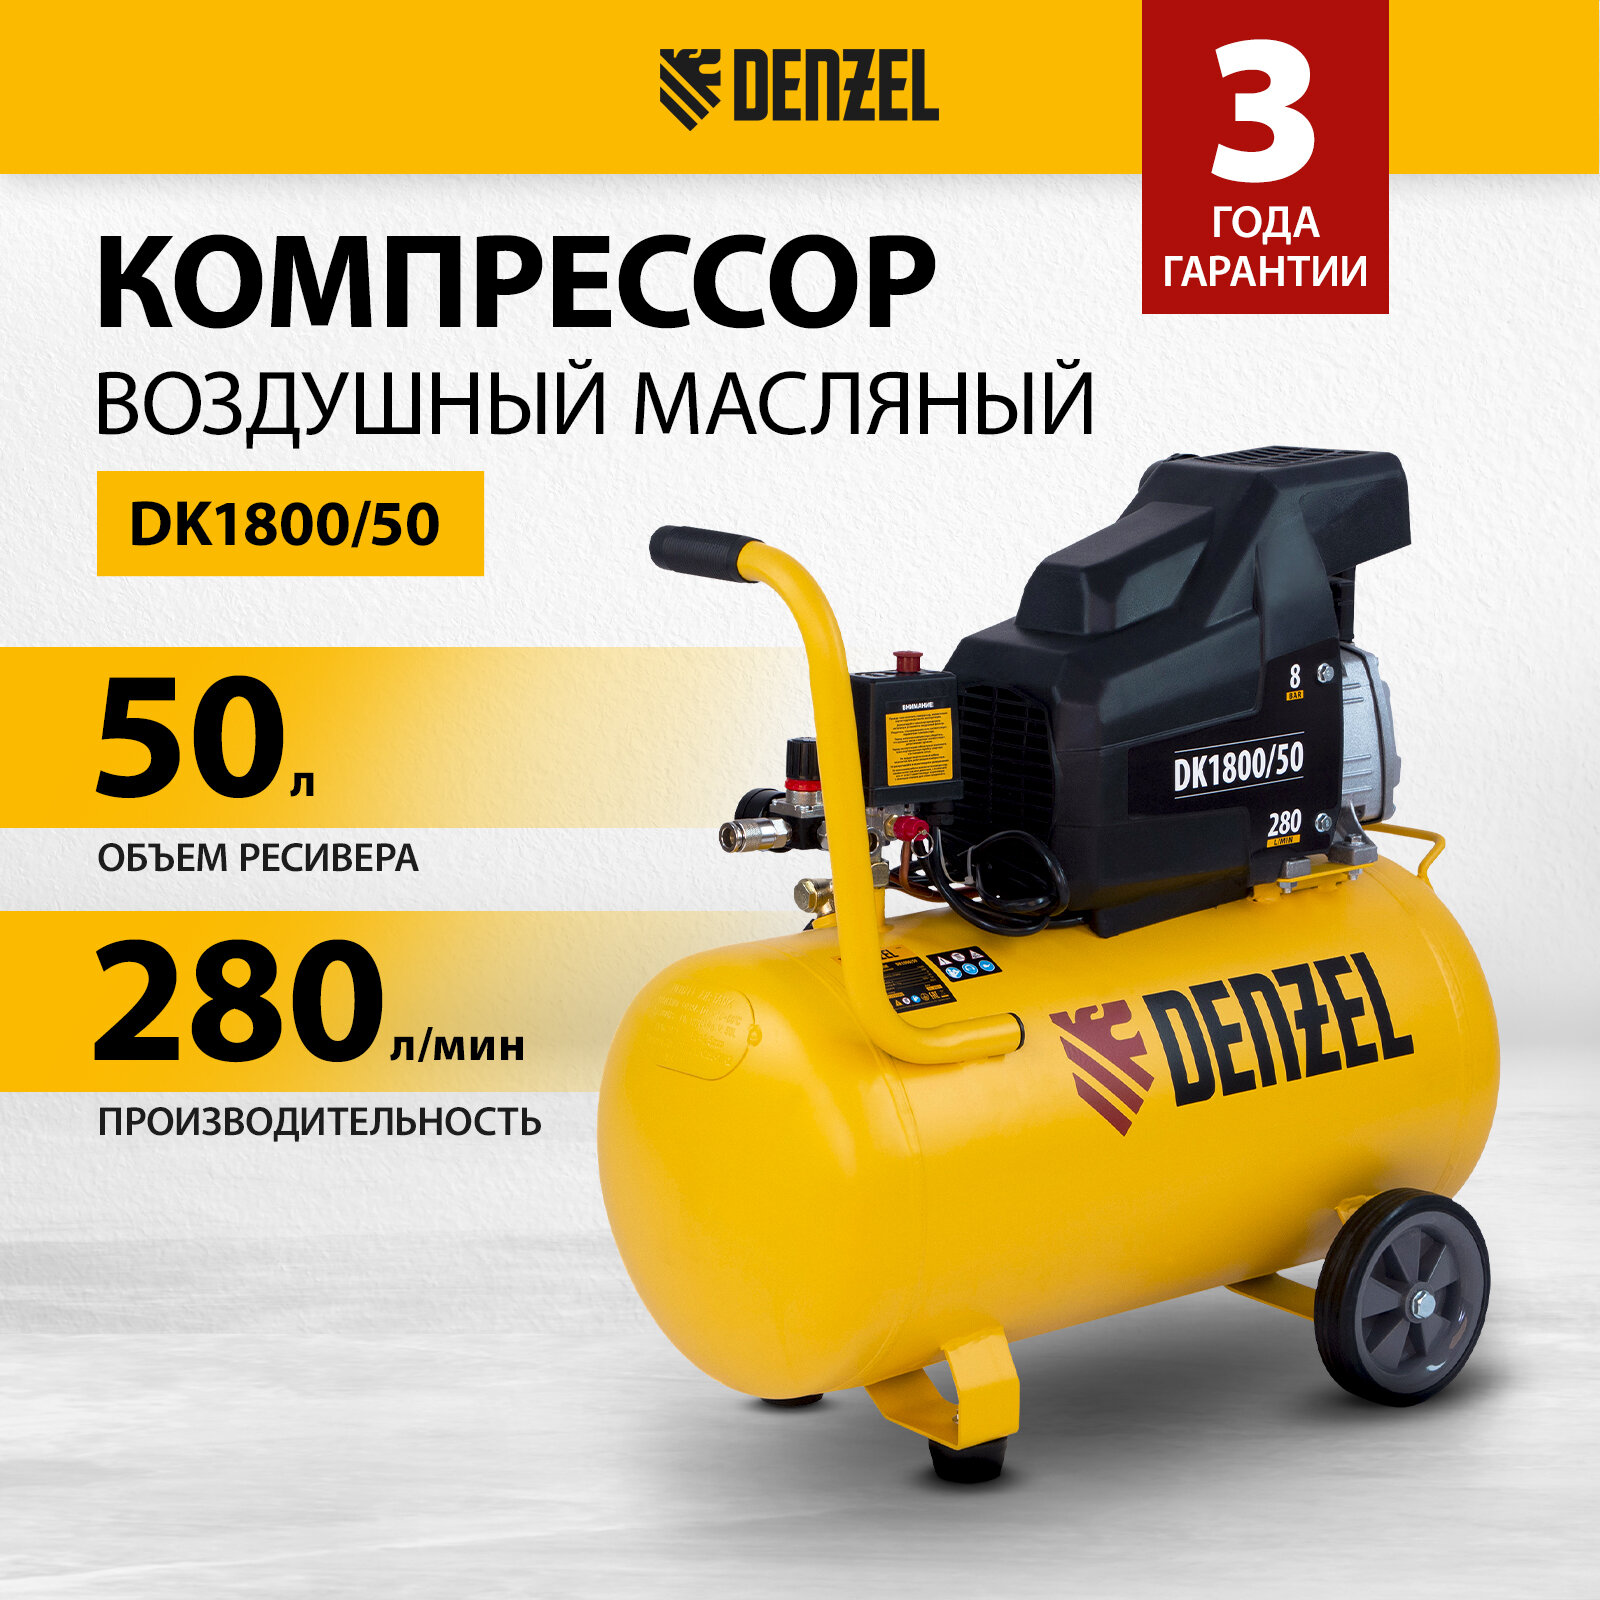 Компрессор масляный Denzel DK 1800/50 Х-PRO 50 л 1.8 кВт